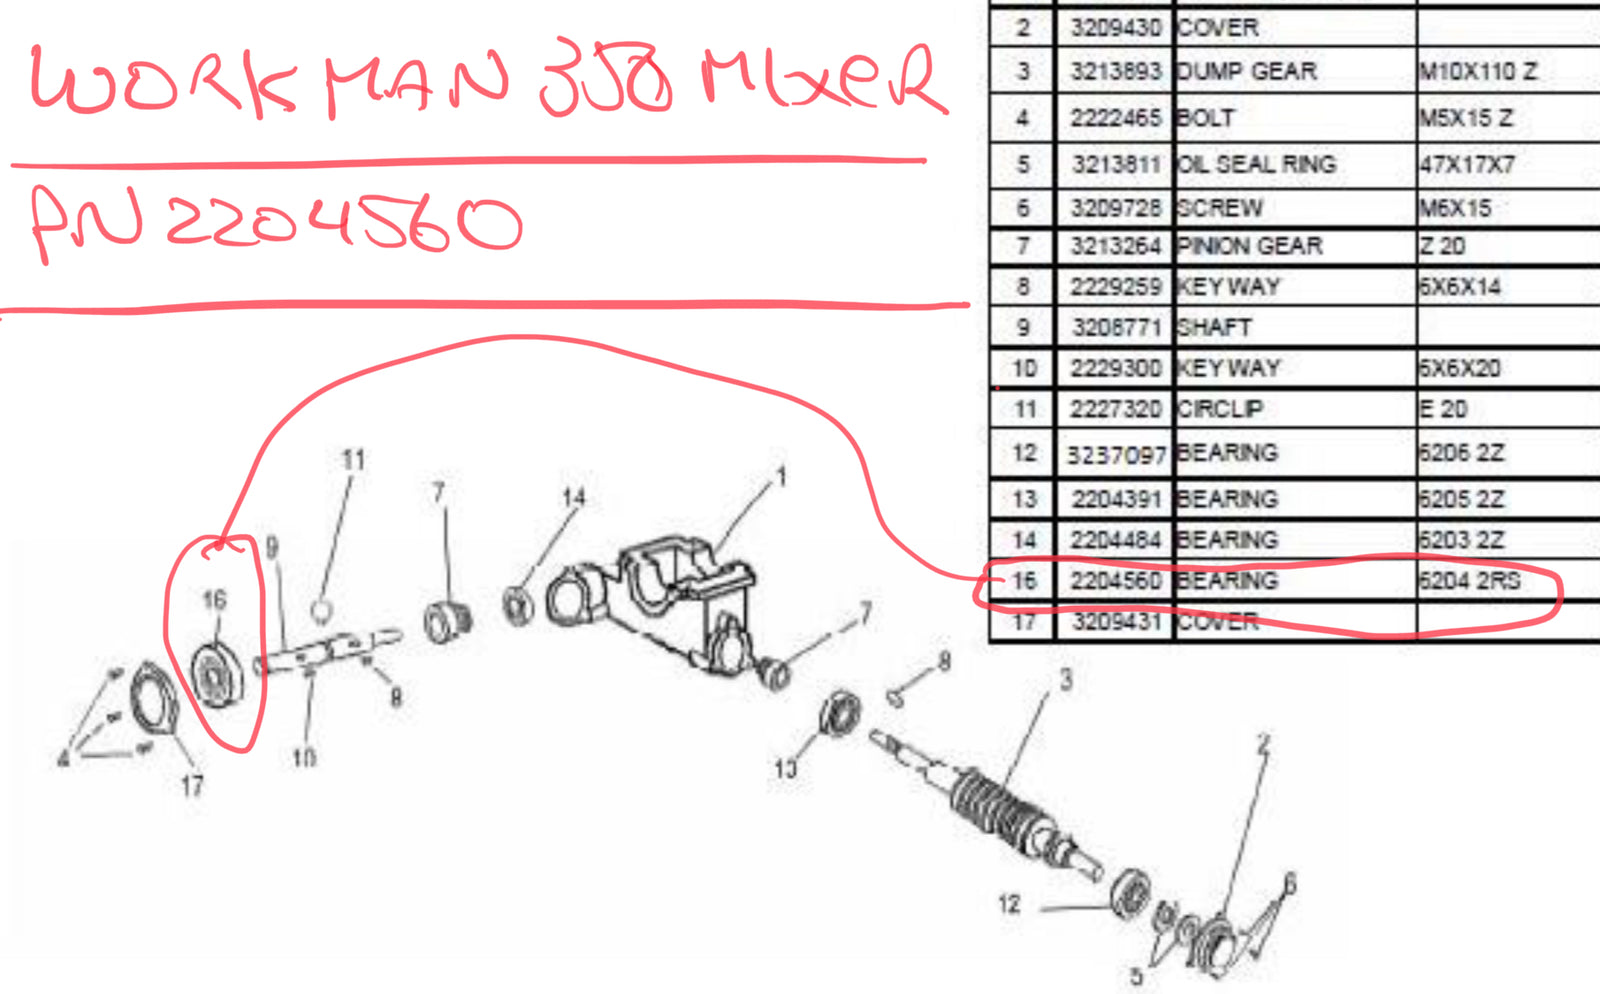 PN 2204560 - Bearing for Dump Assembly - IMER Workman 350 Mixer